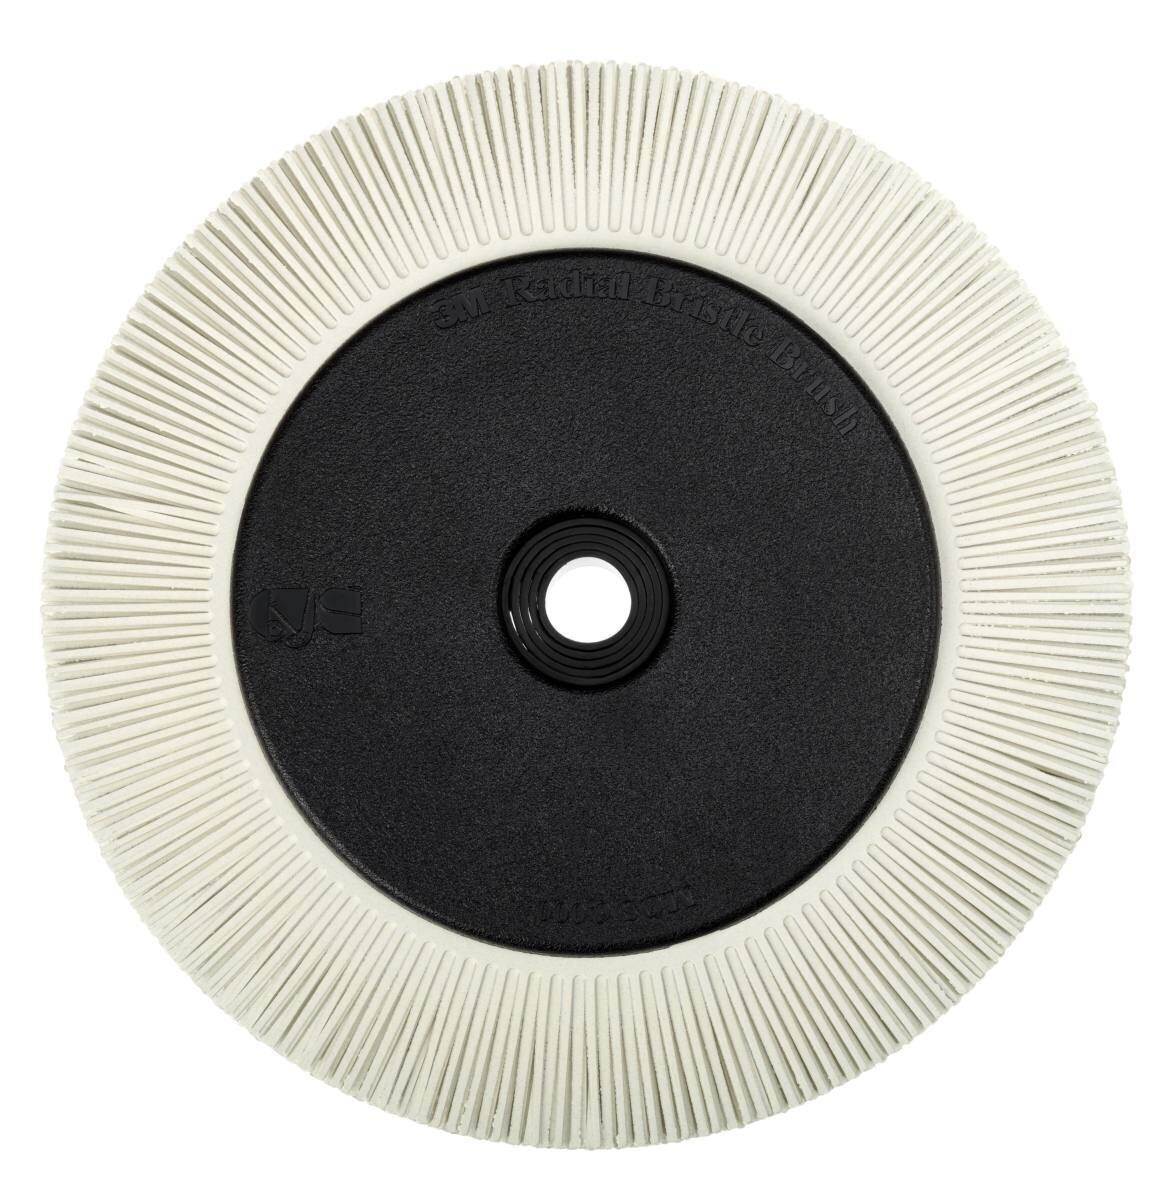 3M Scotch-Brite Radial Bristle Disc BB-ZB laipalla, valkoinen, 203.2, mm P120, tyyppi S #33083